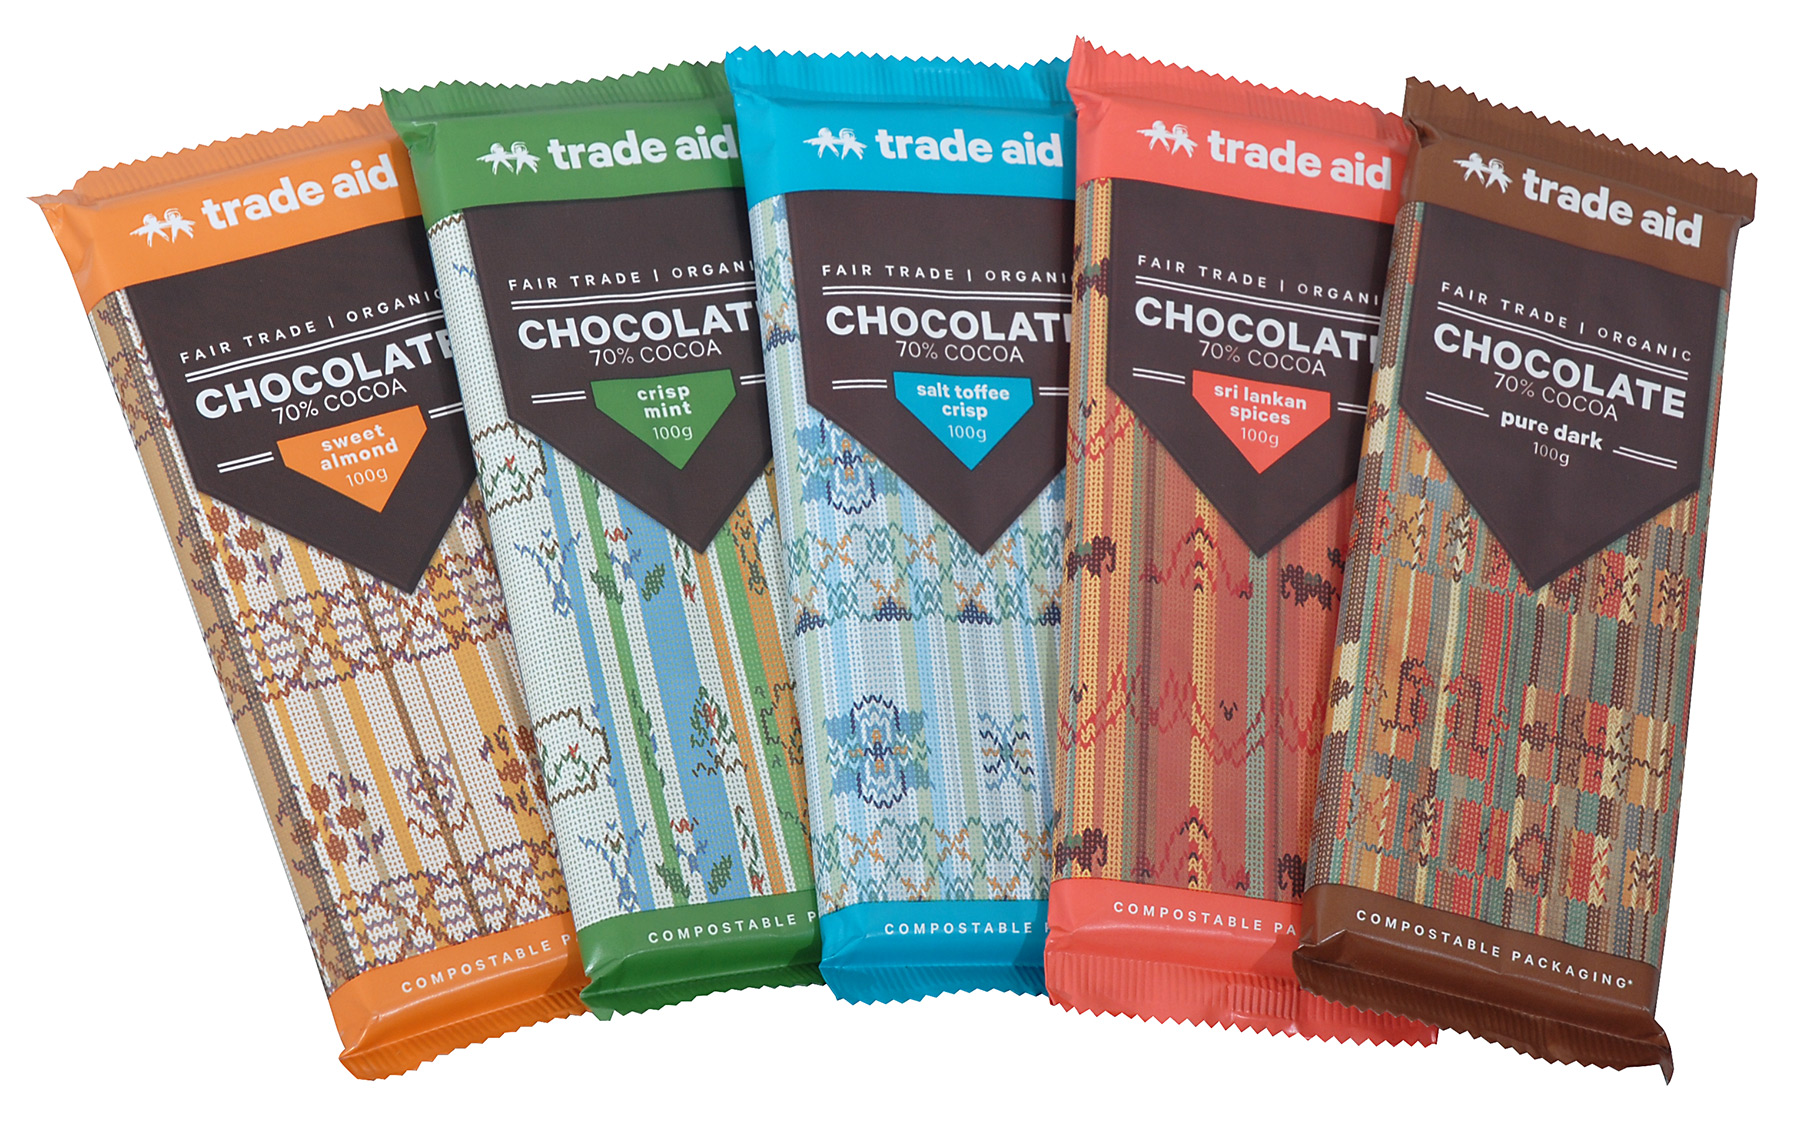 Organic fair trade chocolate